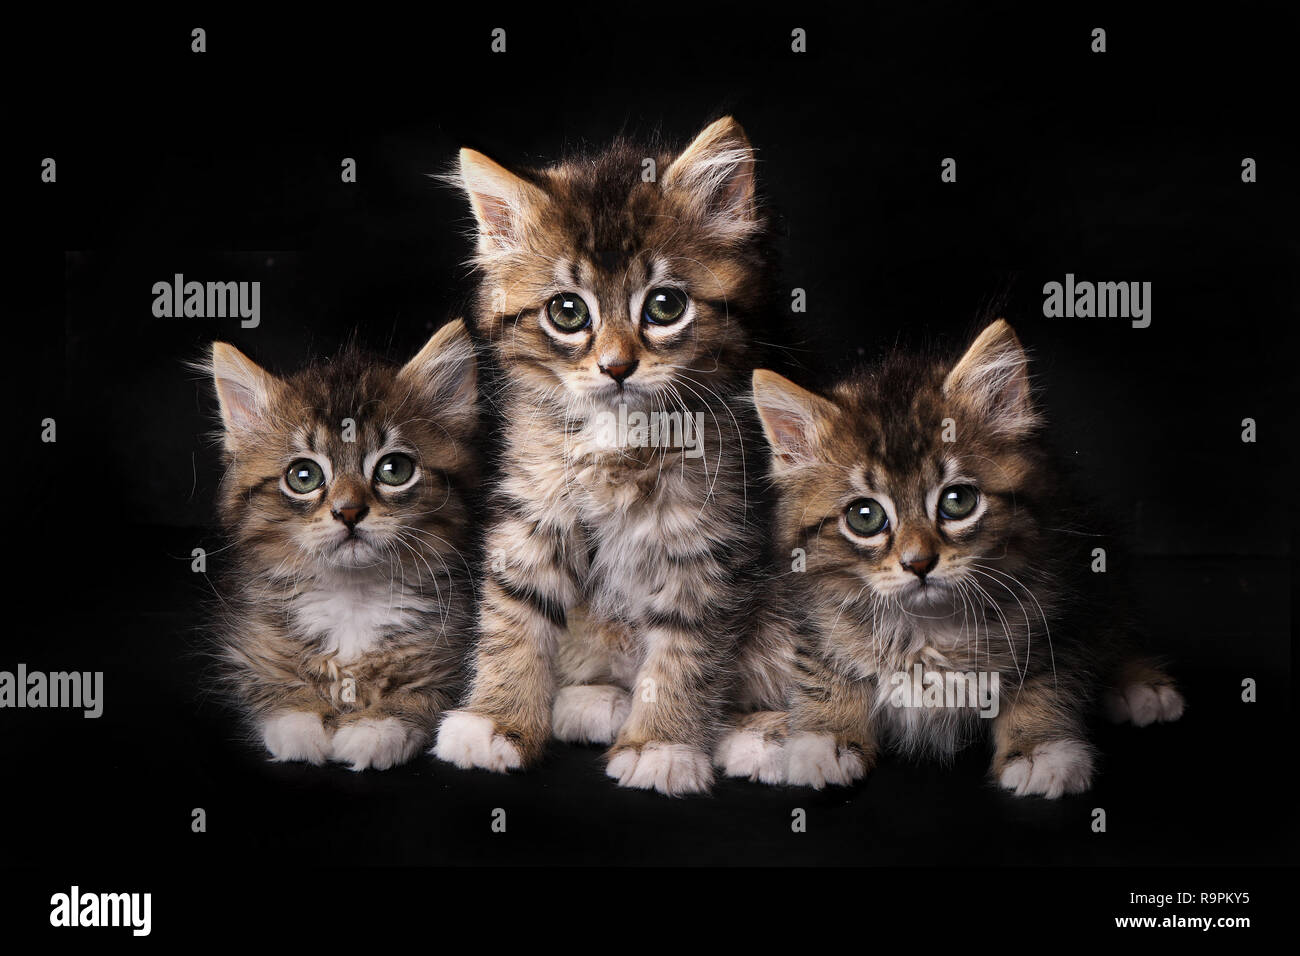 Adorable Cute Kittens Awaiting Adoption Stock Photo